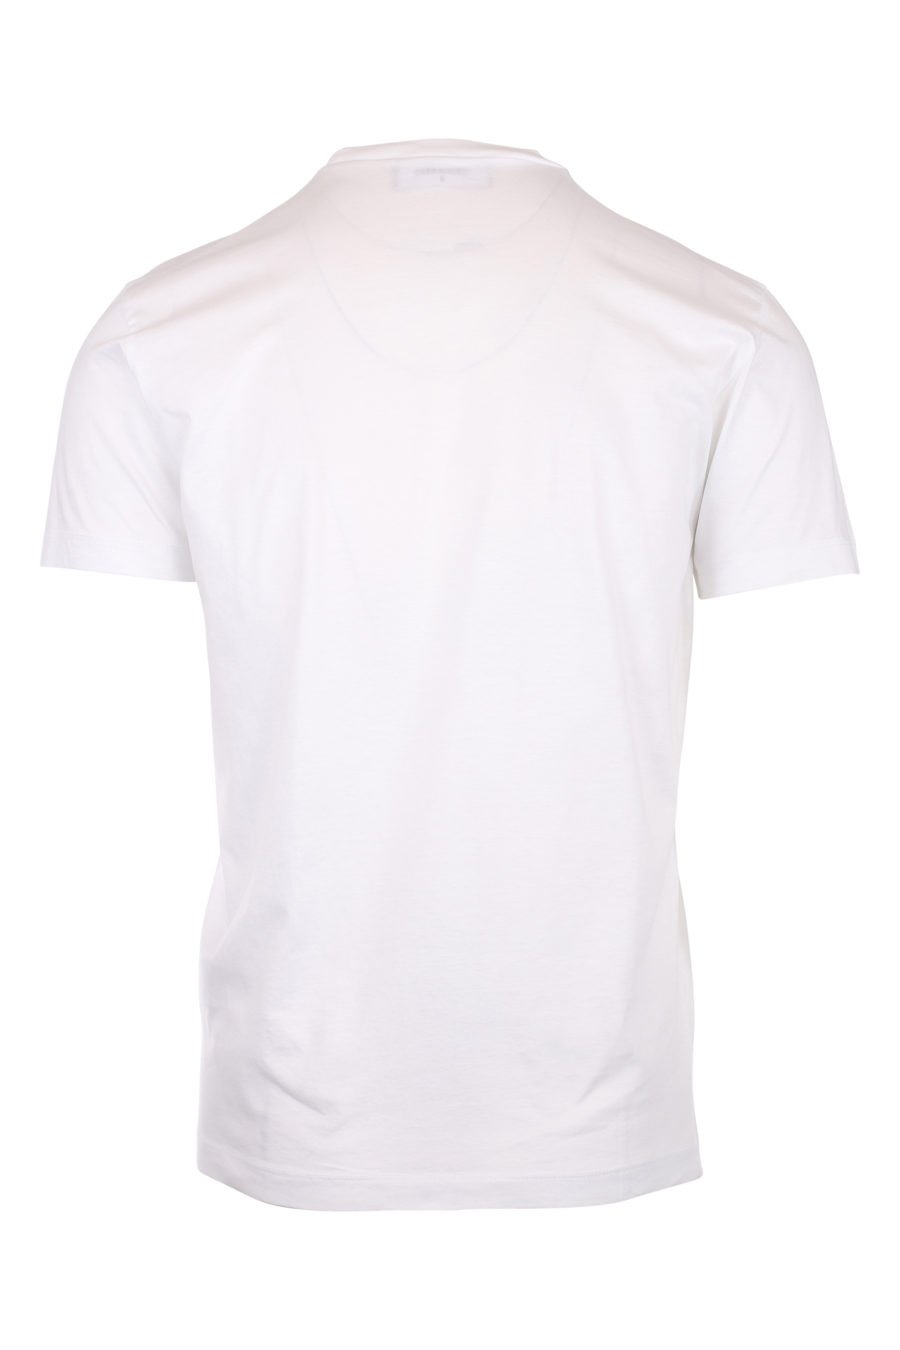 T-shirt blanc avec logo "icon" - IMG 9768